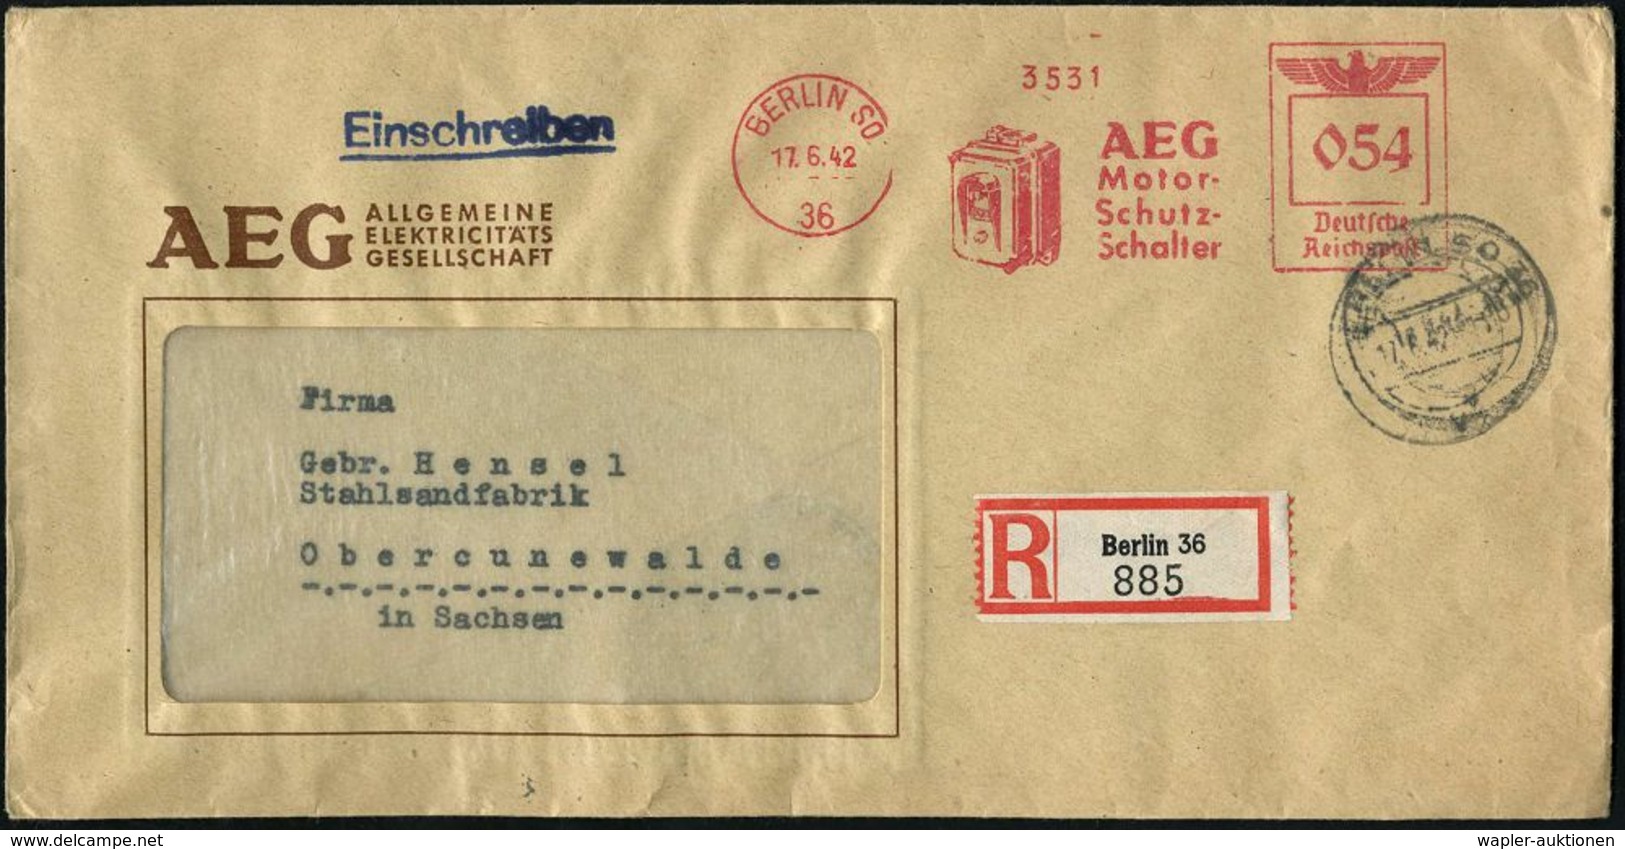 BERLIN SO/ 36/ AEG/ Motor-/ Schutz-/ Schalter 1942 (17.6.) AFS 054 Pf. = Schutzschalter + RZ: Berlin 36, AEG-Firmen-R-Bf - Elettricità